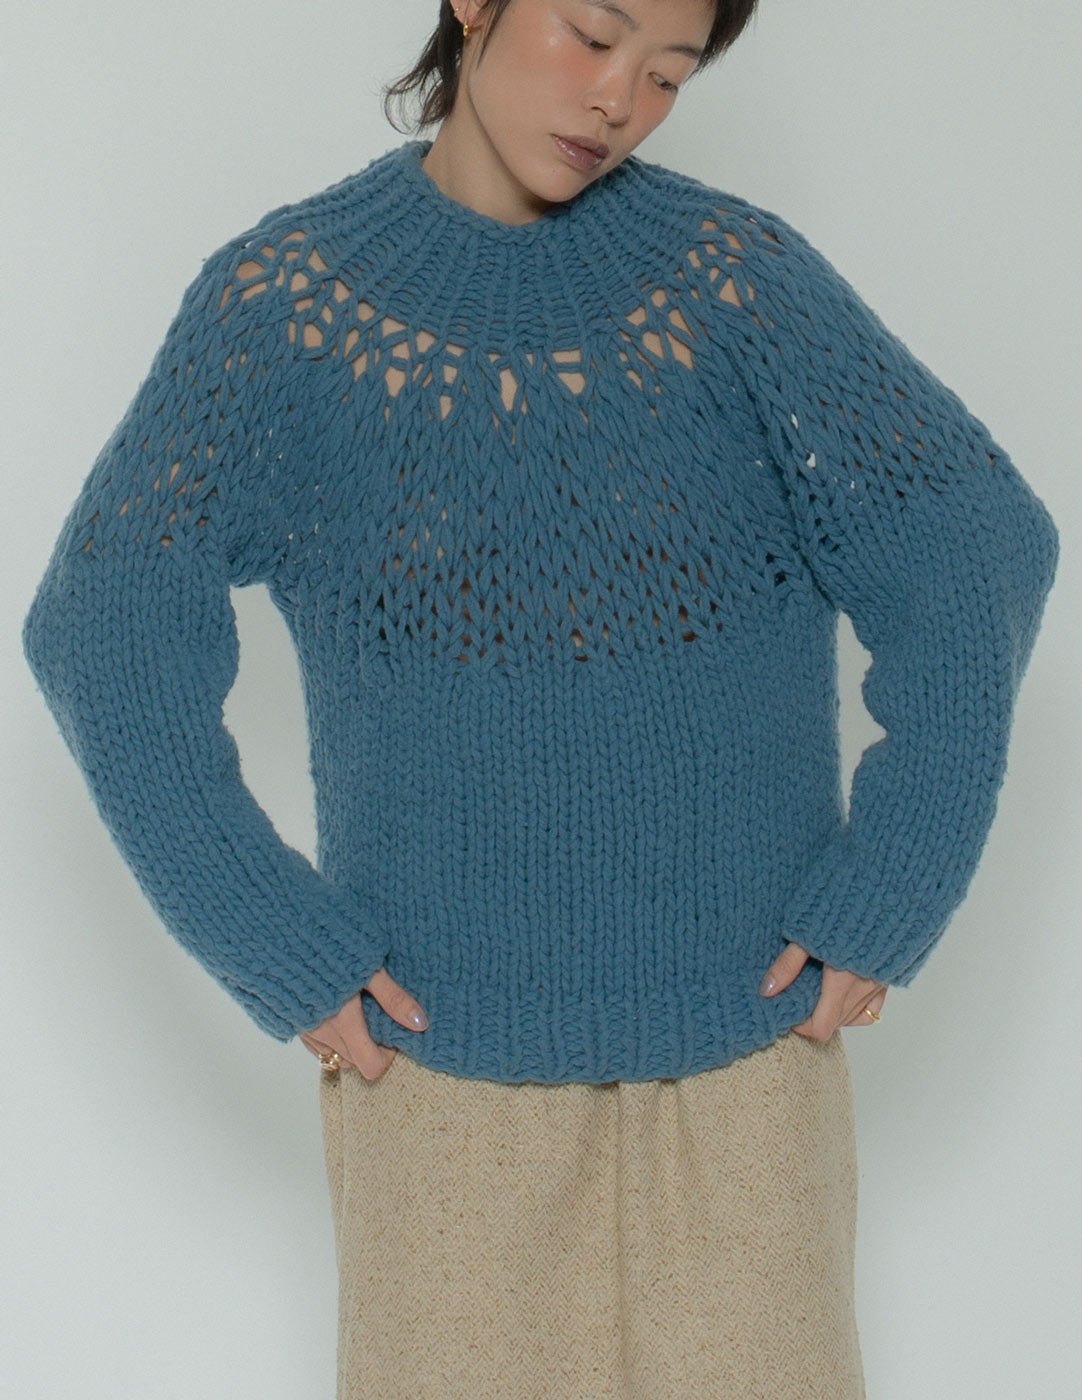 Dries Van Noten dusty blue chunky woven sweater detail